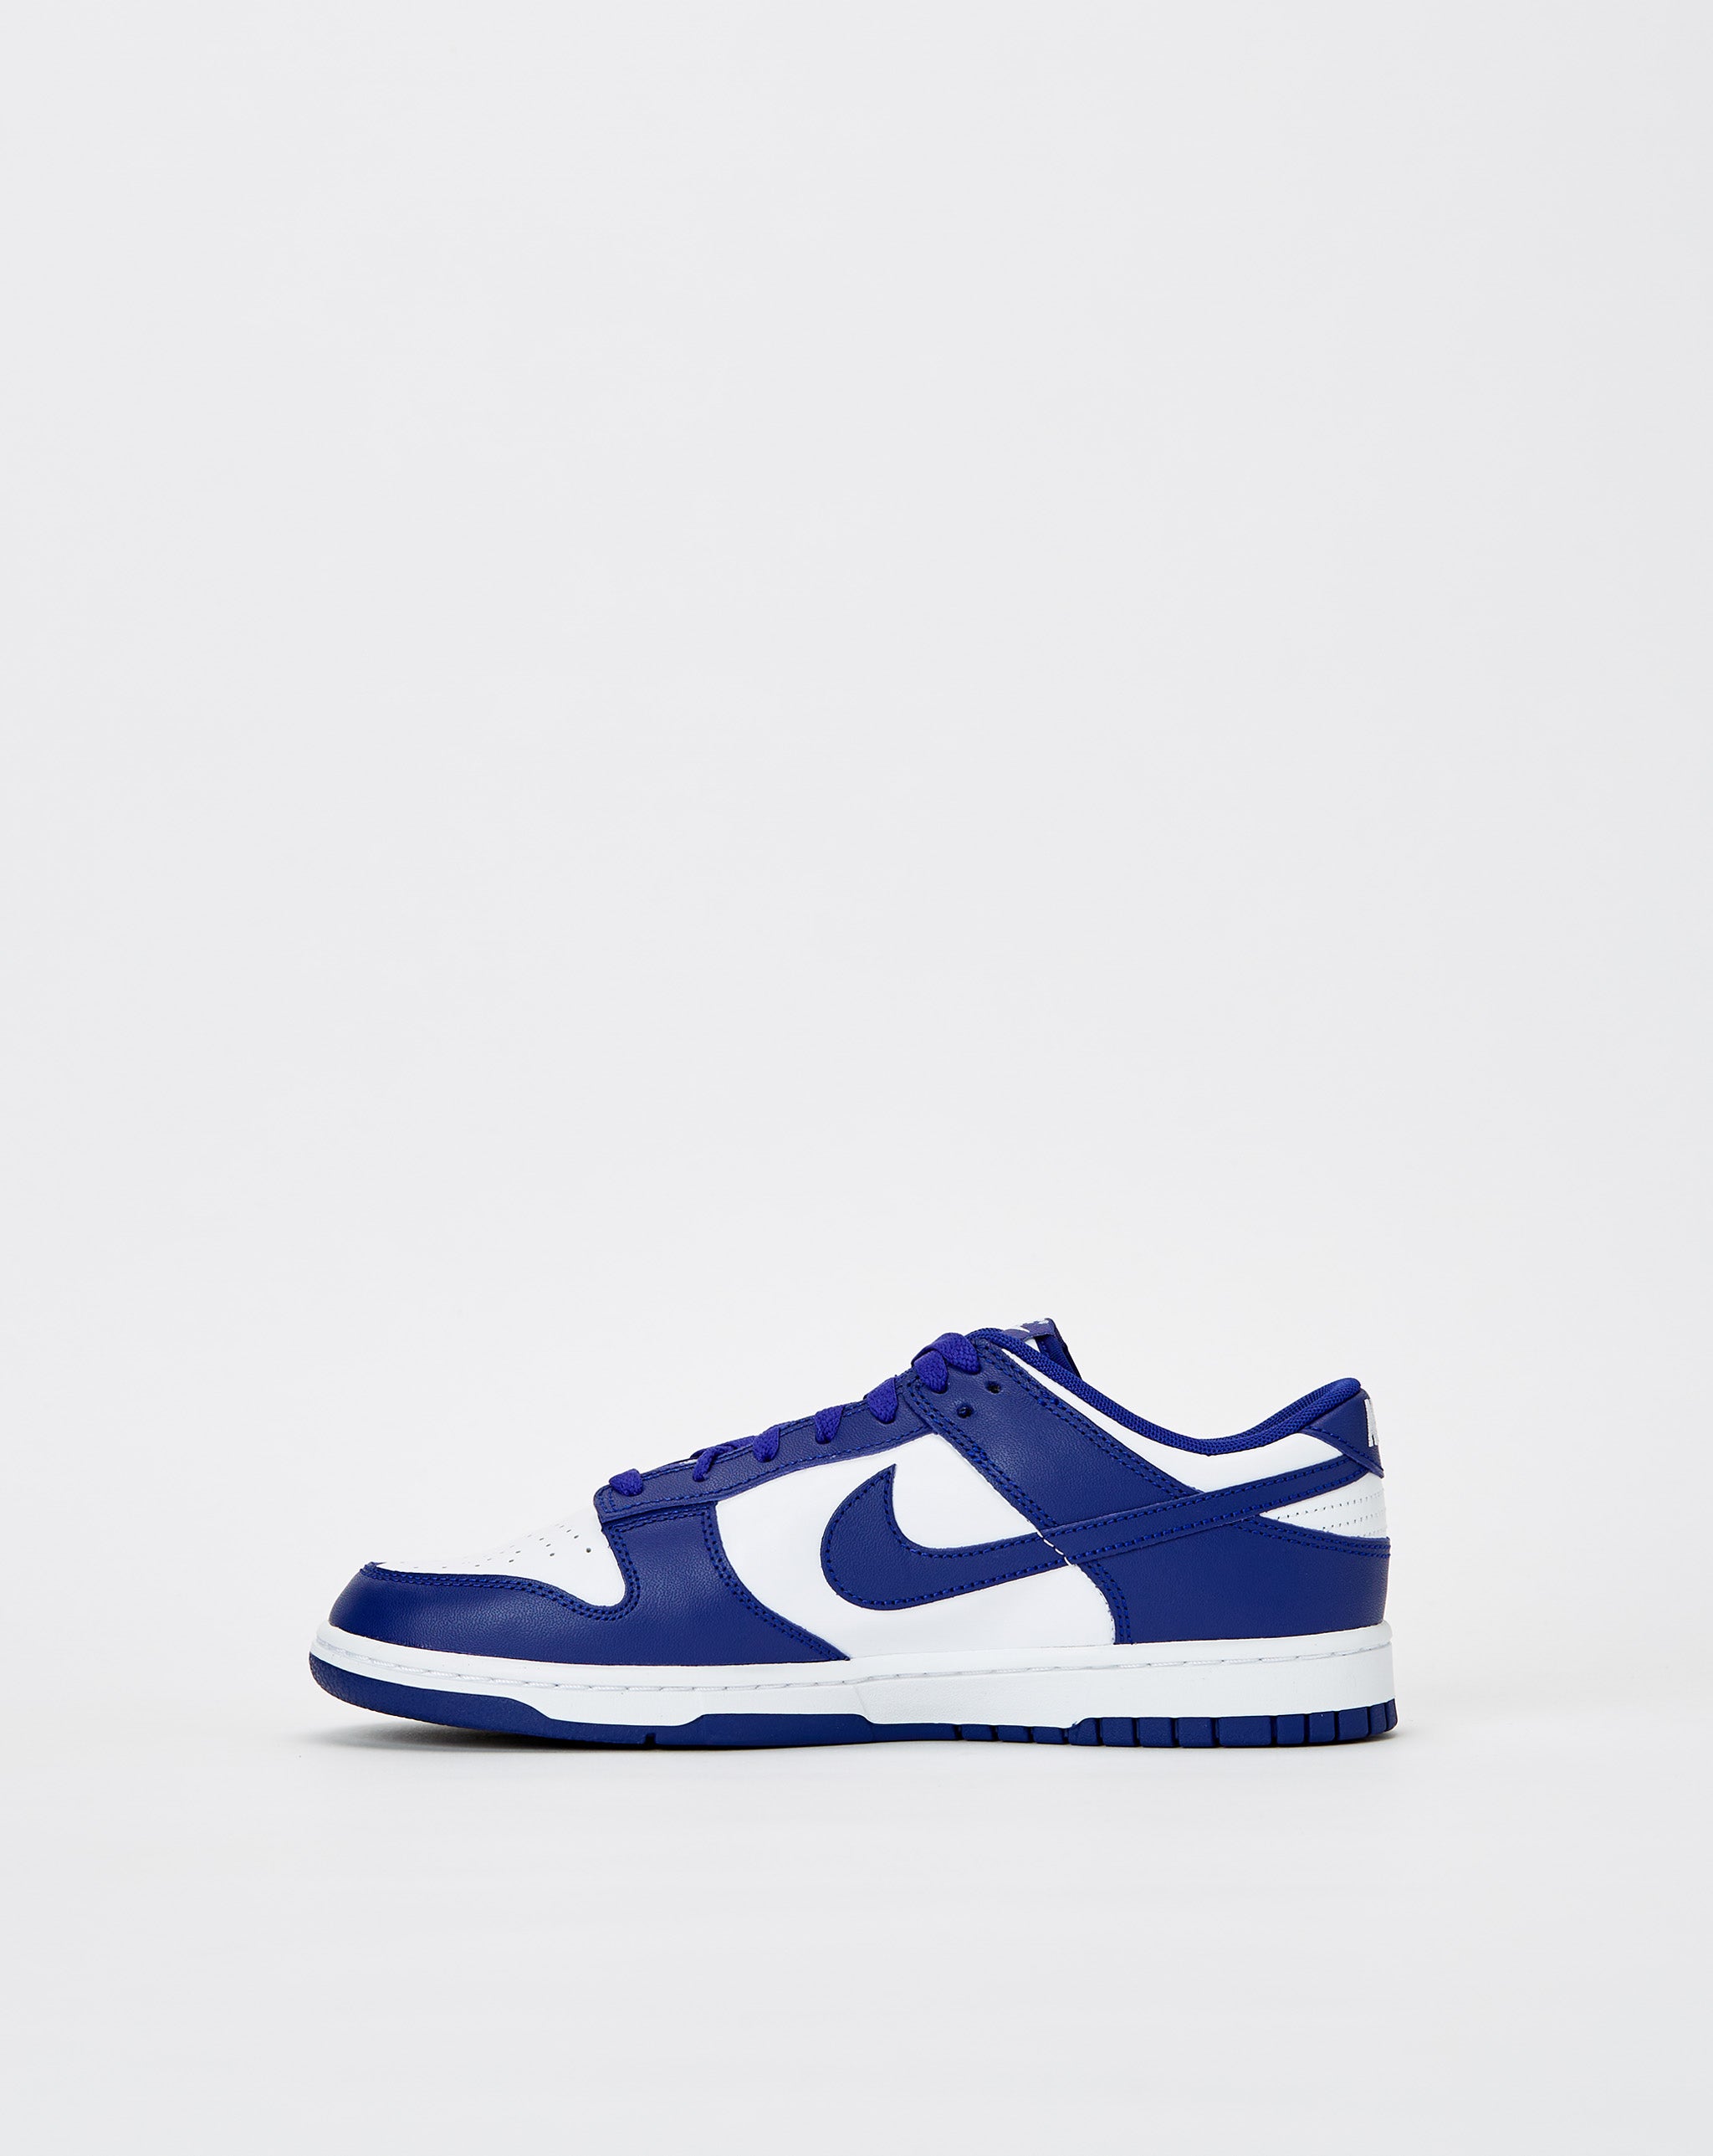 Nike nike mens lunarglide squadron blue pants shoes  - Cheap Cerbe Jordan outlet